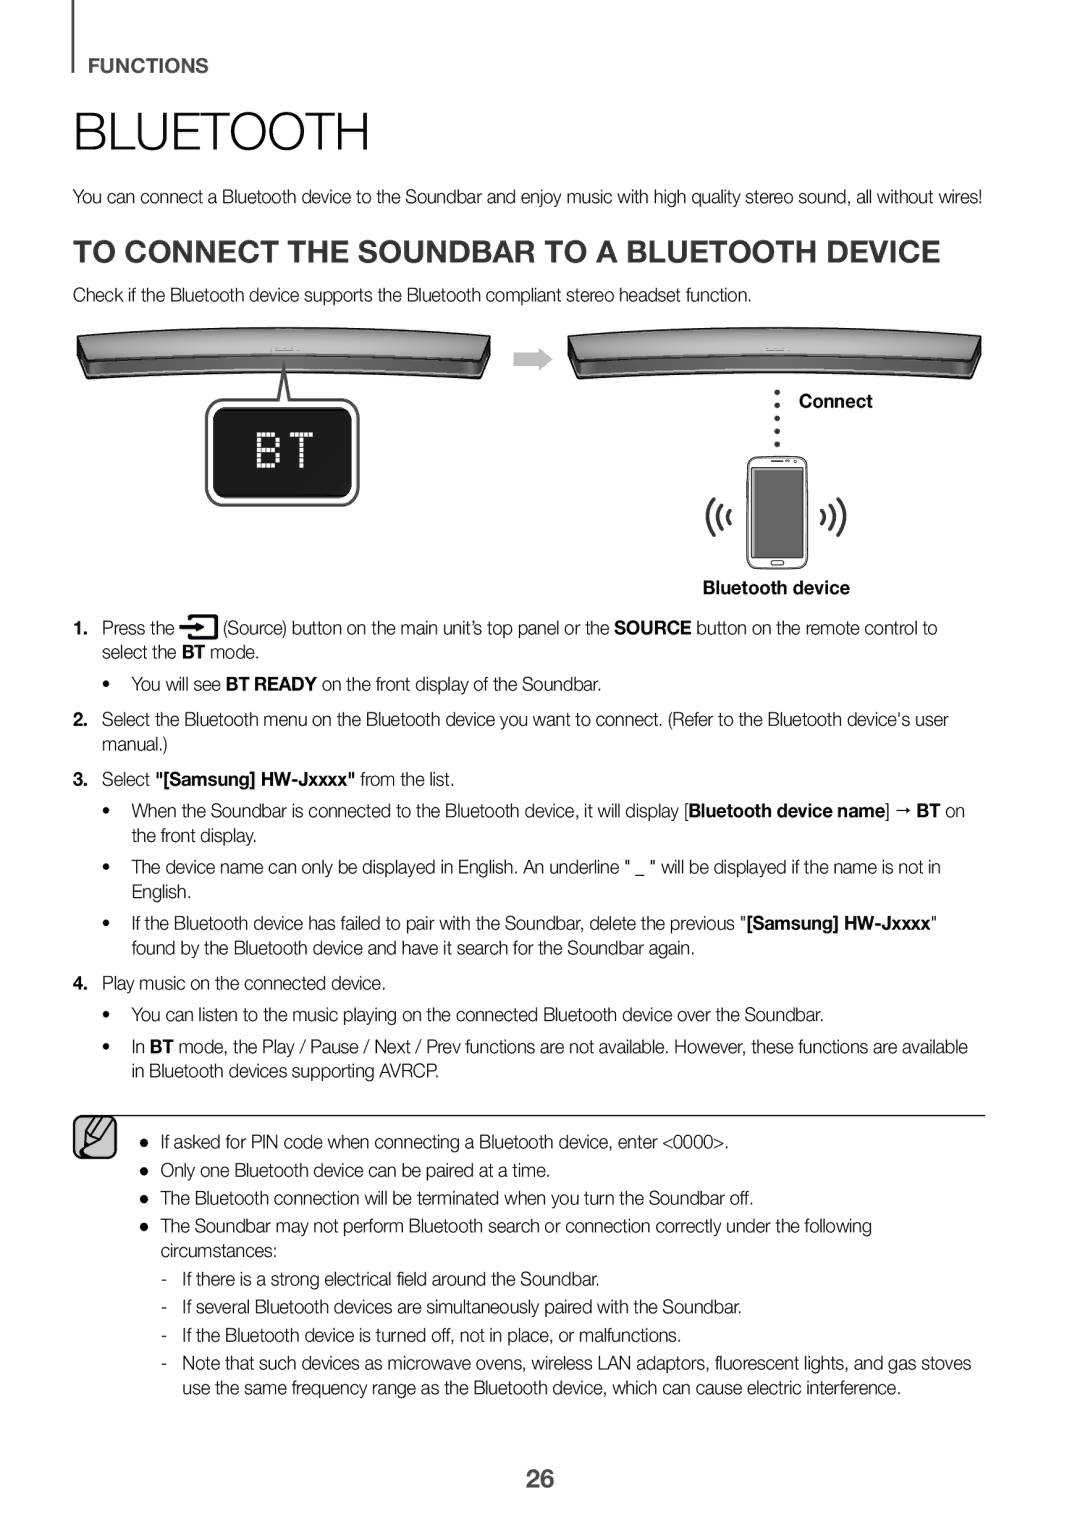 Samsung HW-J7501/XV manual To Connect the Soundbar to a Bluetooth Device, Connect Bluetooth device 